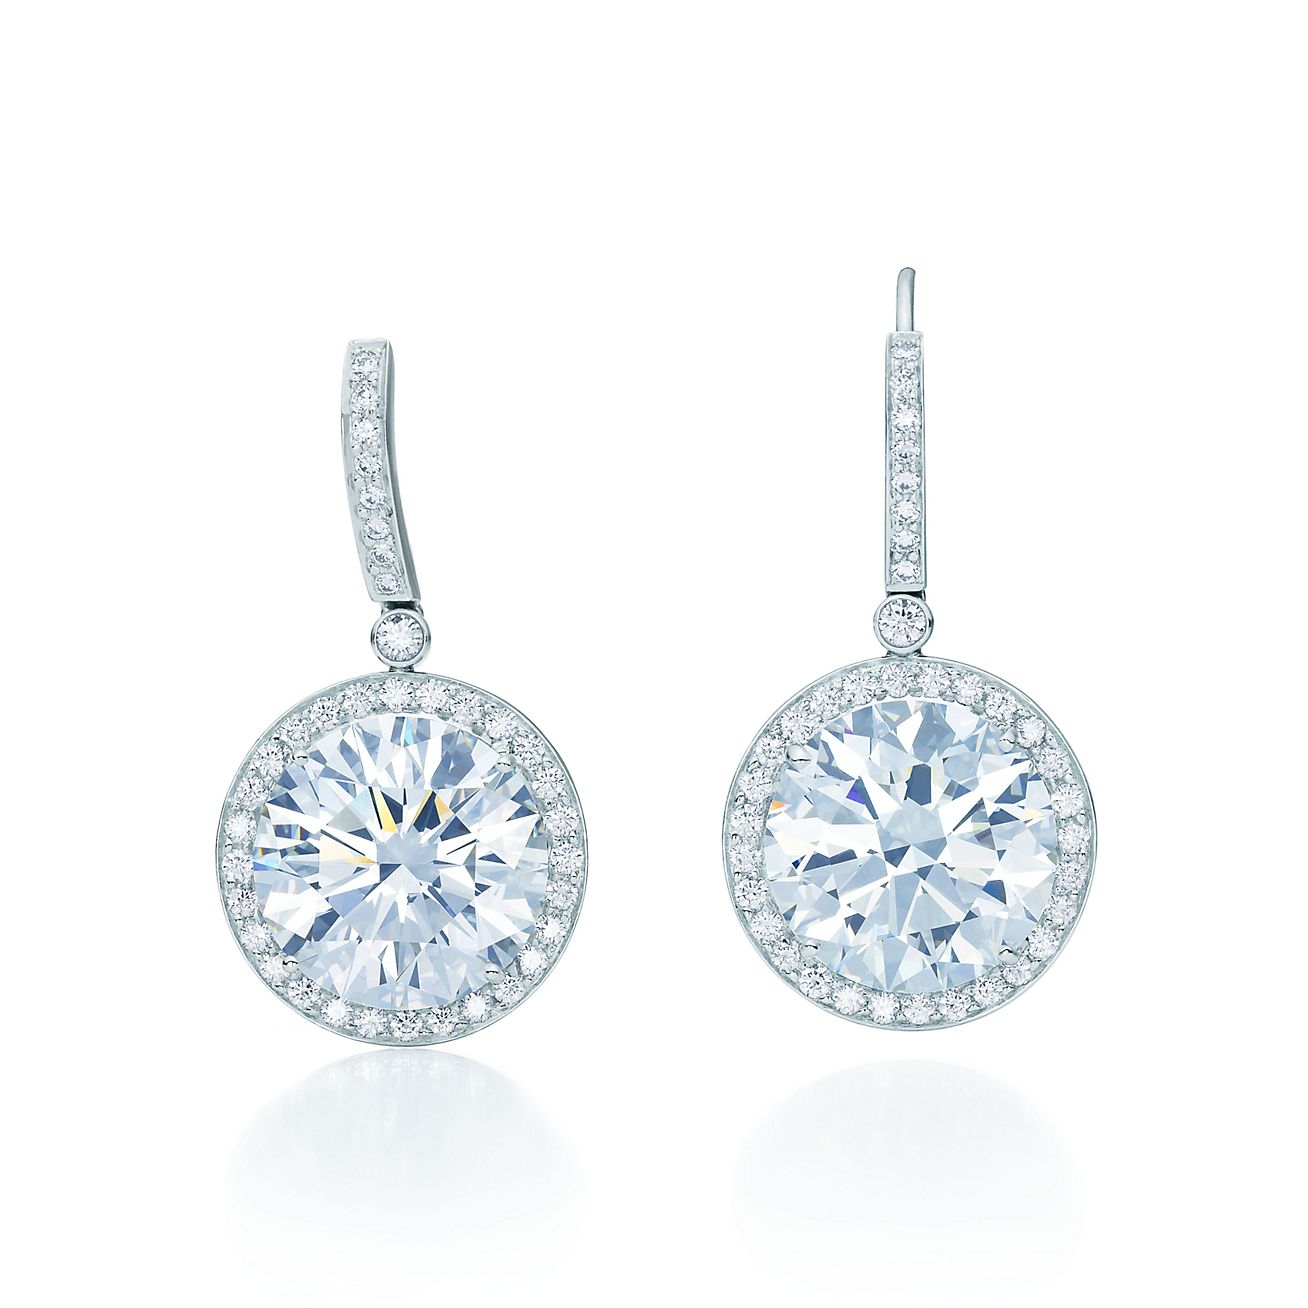 Earrings of round brilliant diamonds in 